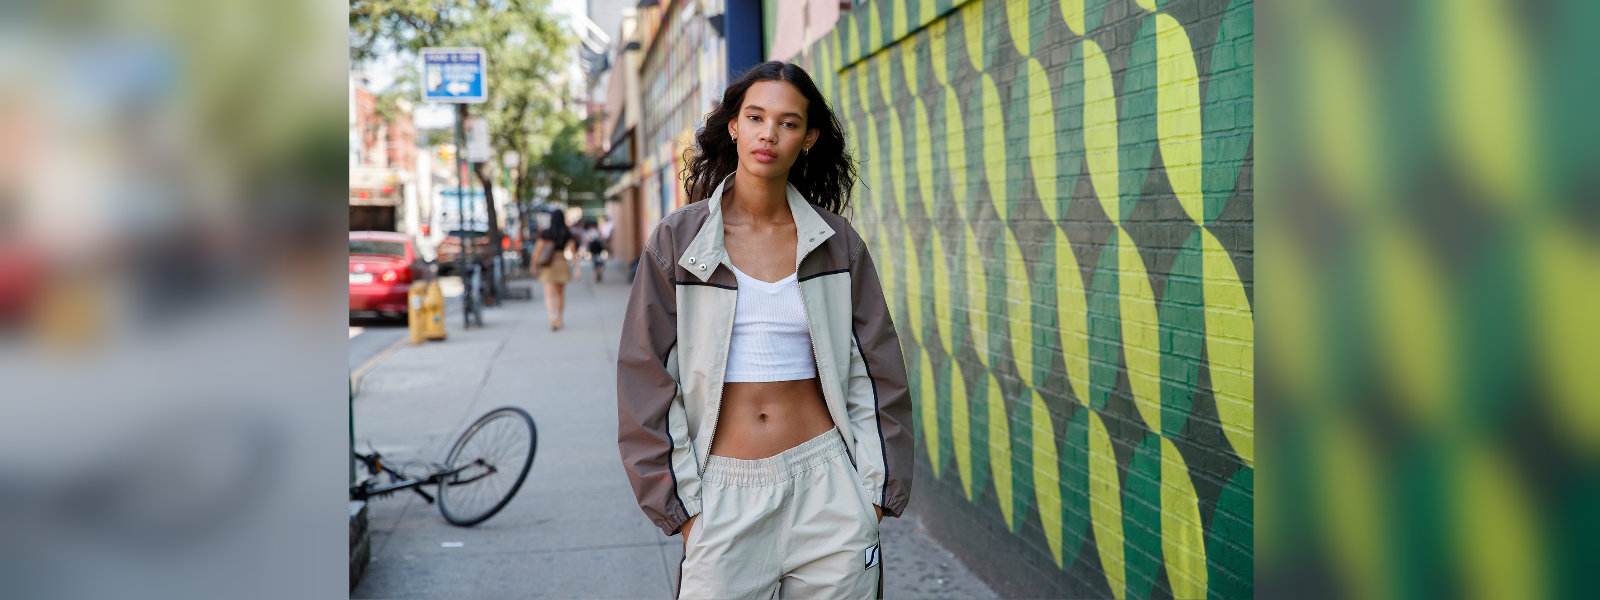 Model shares her New York Fashion Week journey